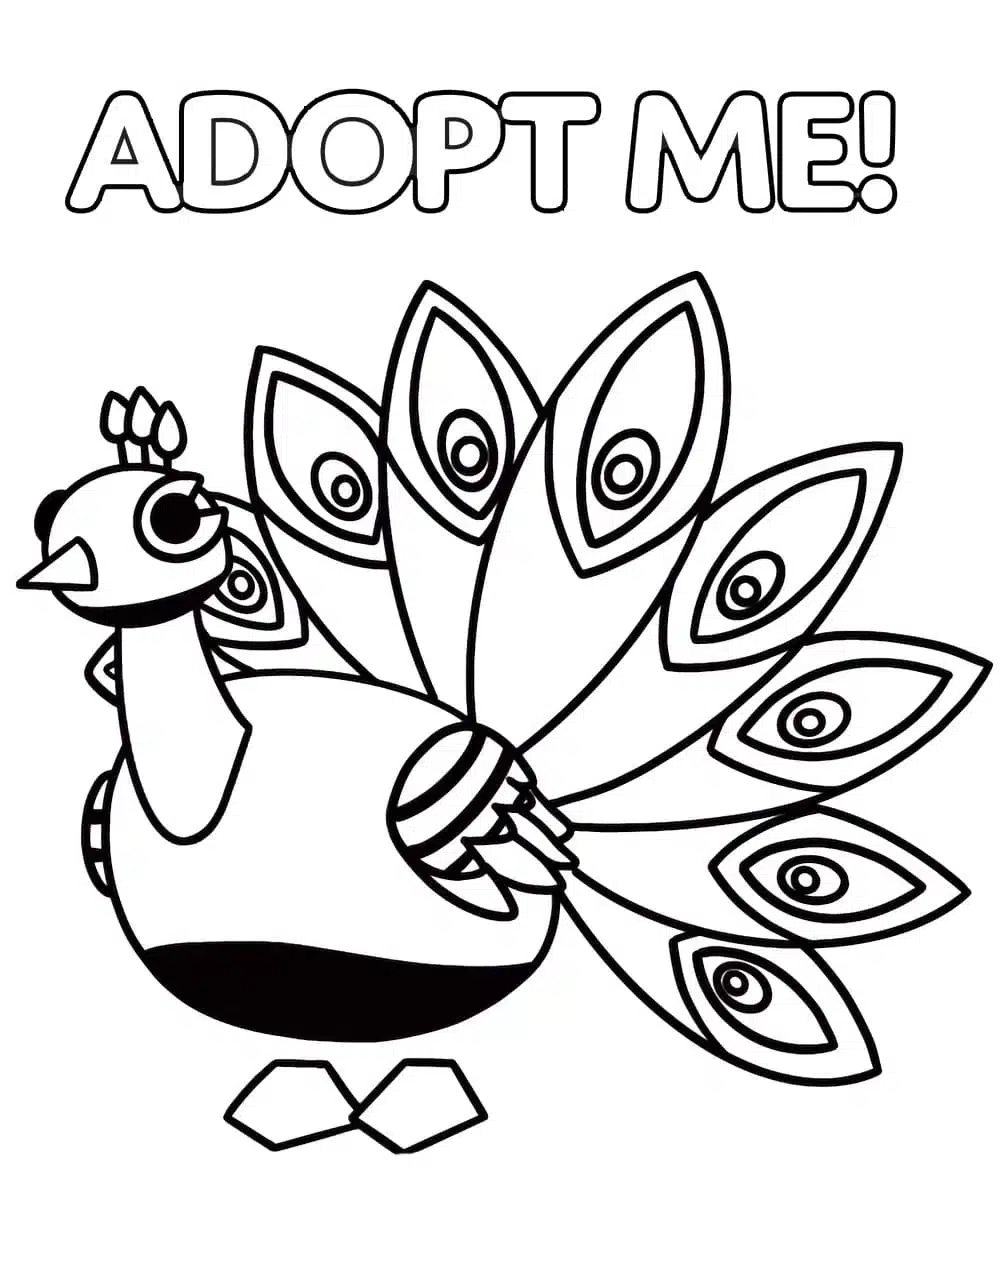 Adopt Me 06